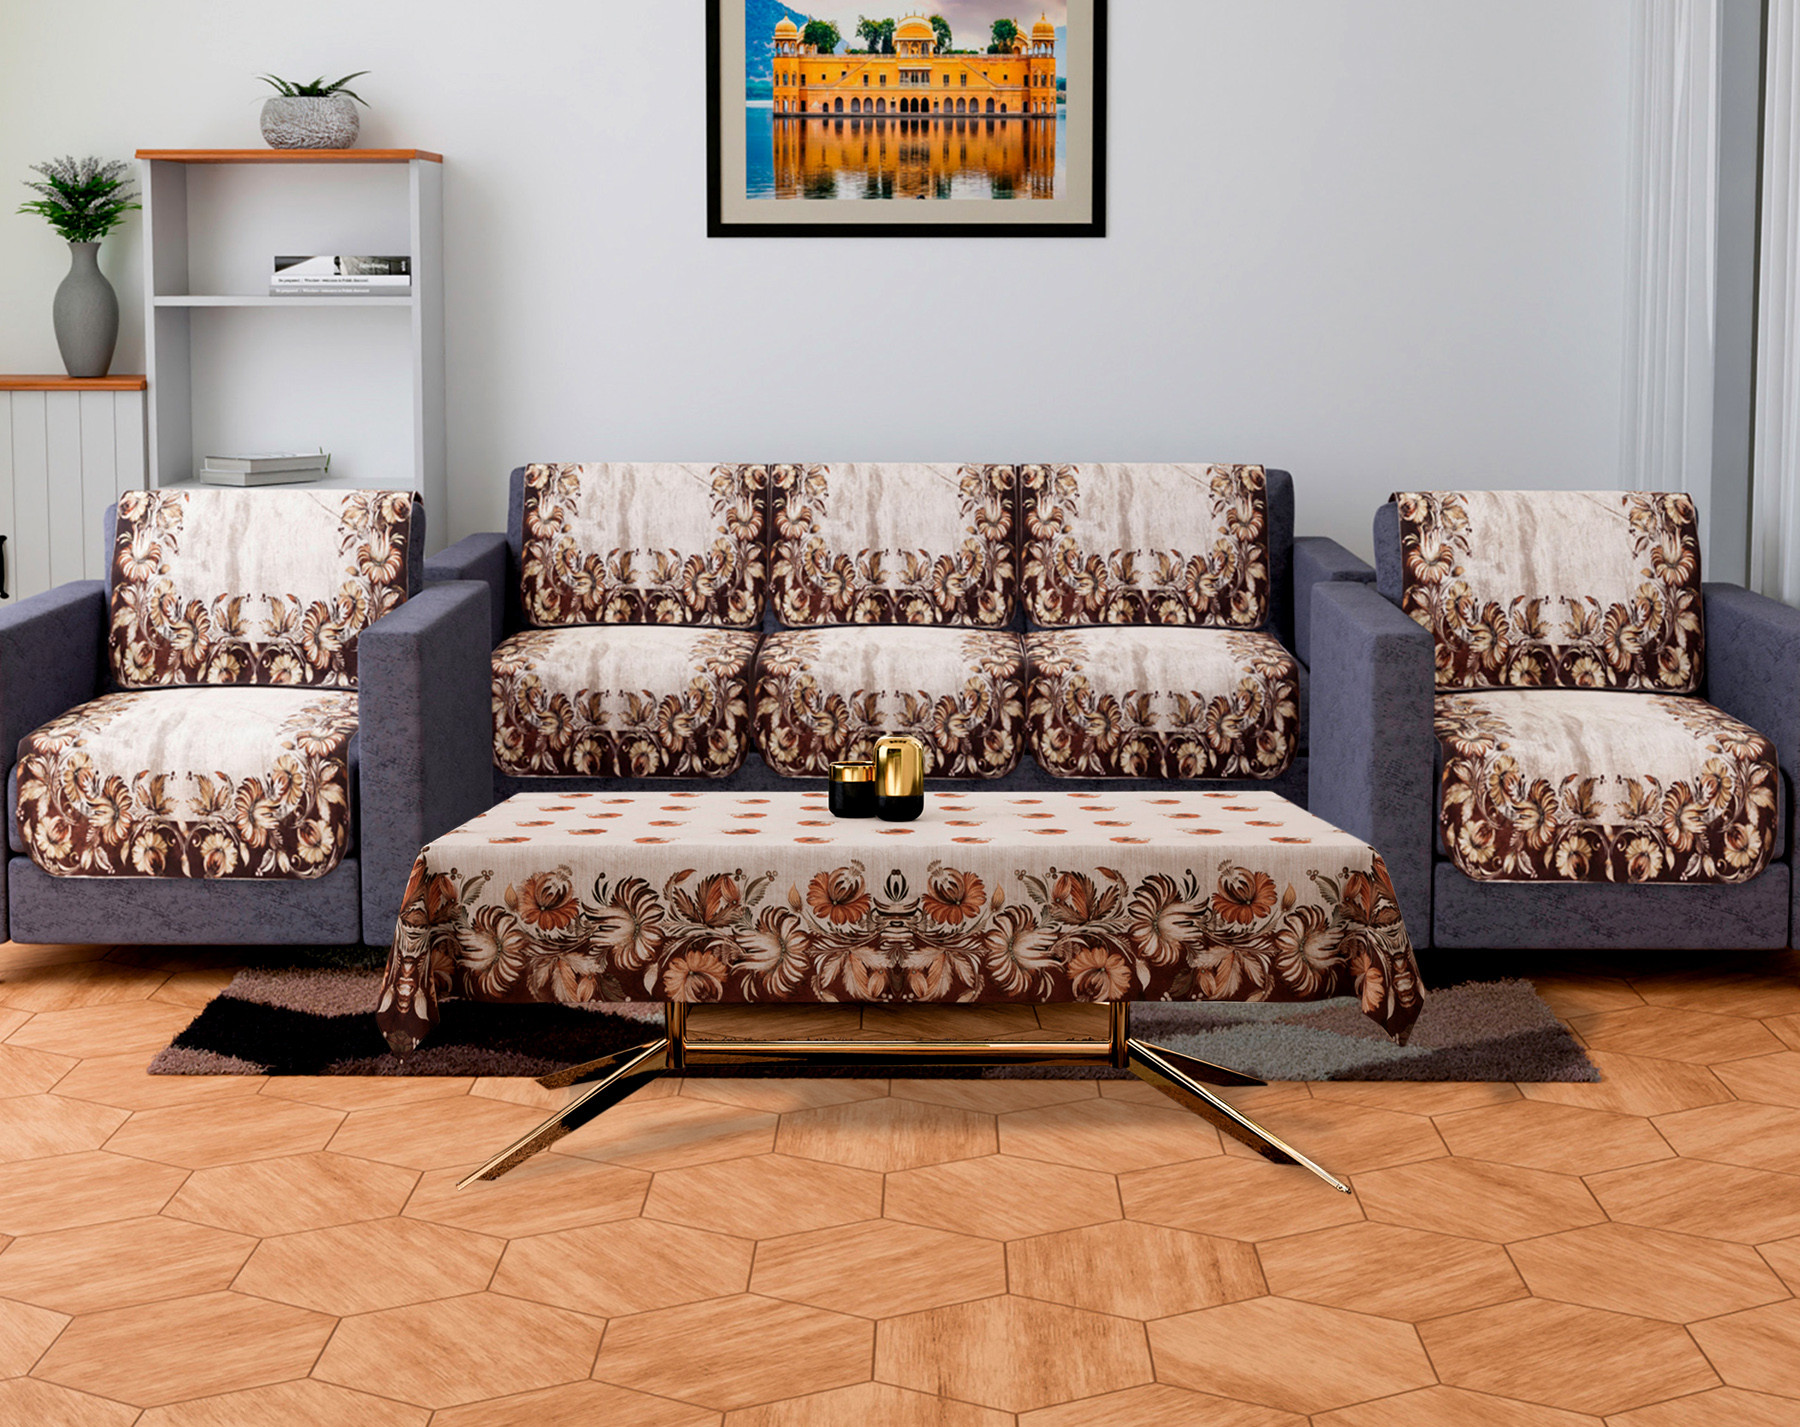 Kuber Industries Sofa Cover | Sofa & Center Table Cover Set | Brown Flower Sofa Cover with Table Cover | Velvet 5 Seater Sofa & Table Cover Set For Living Room | Golden